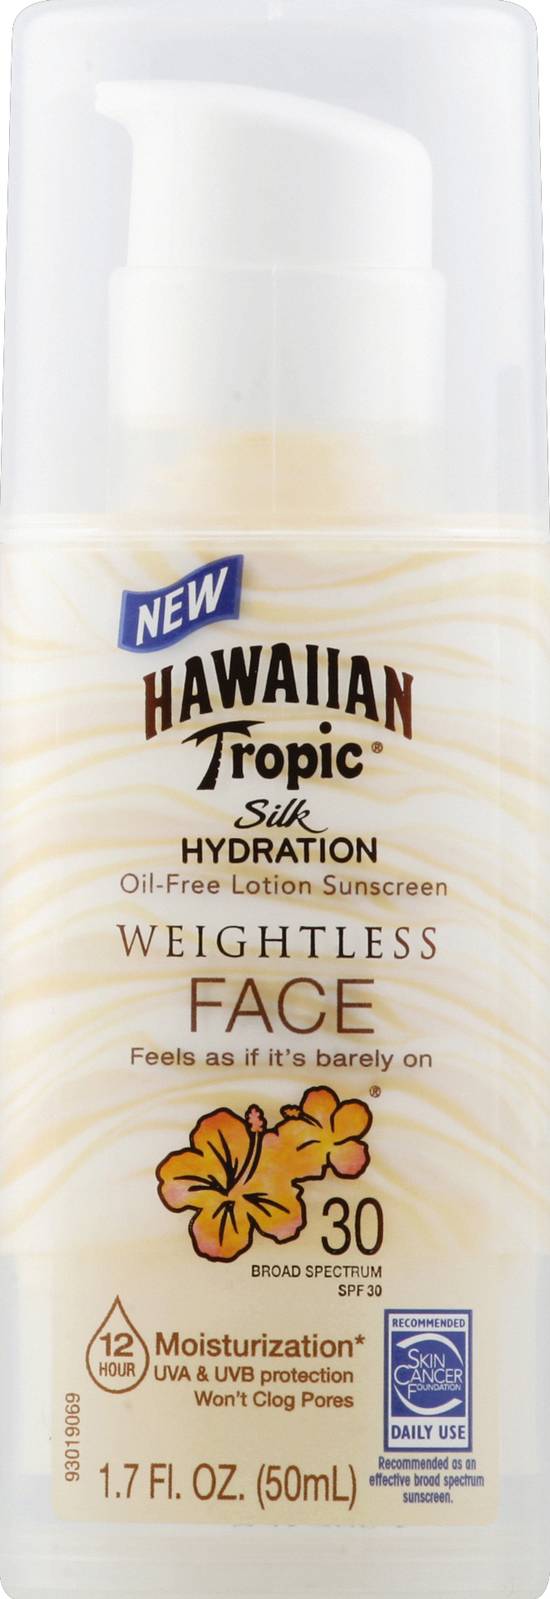 Hawaiian Tropic Silk Hydration Weightless Face Spf 30 Sunscreen (1.7 oz)